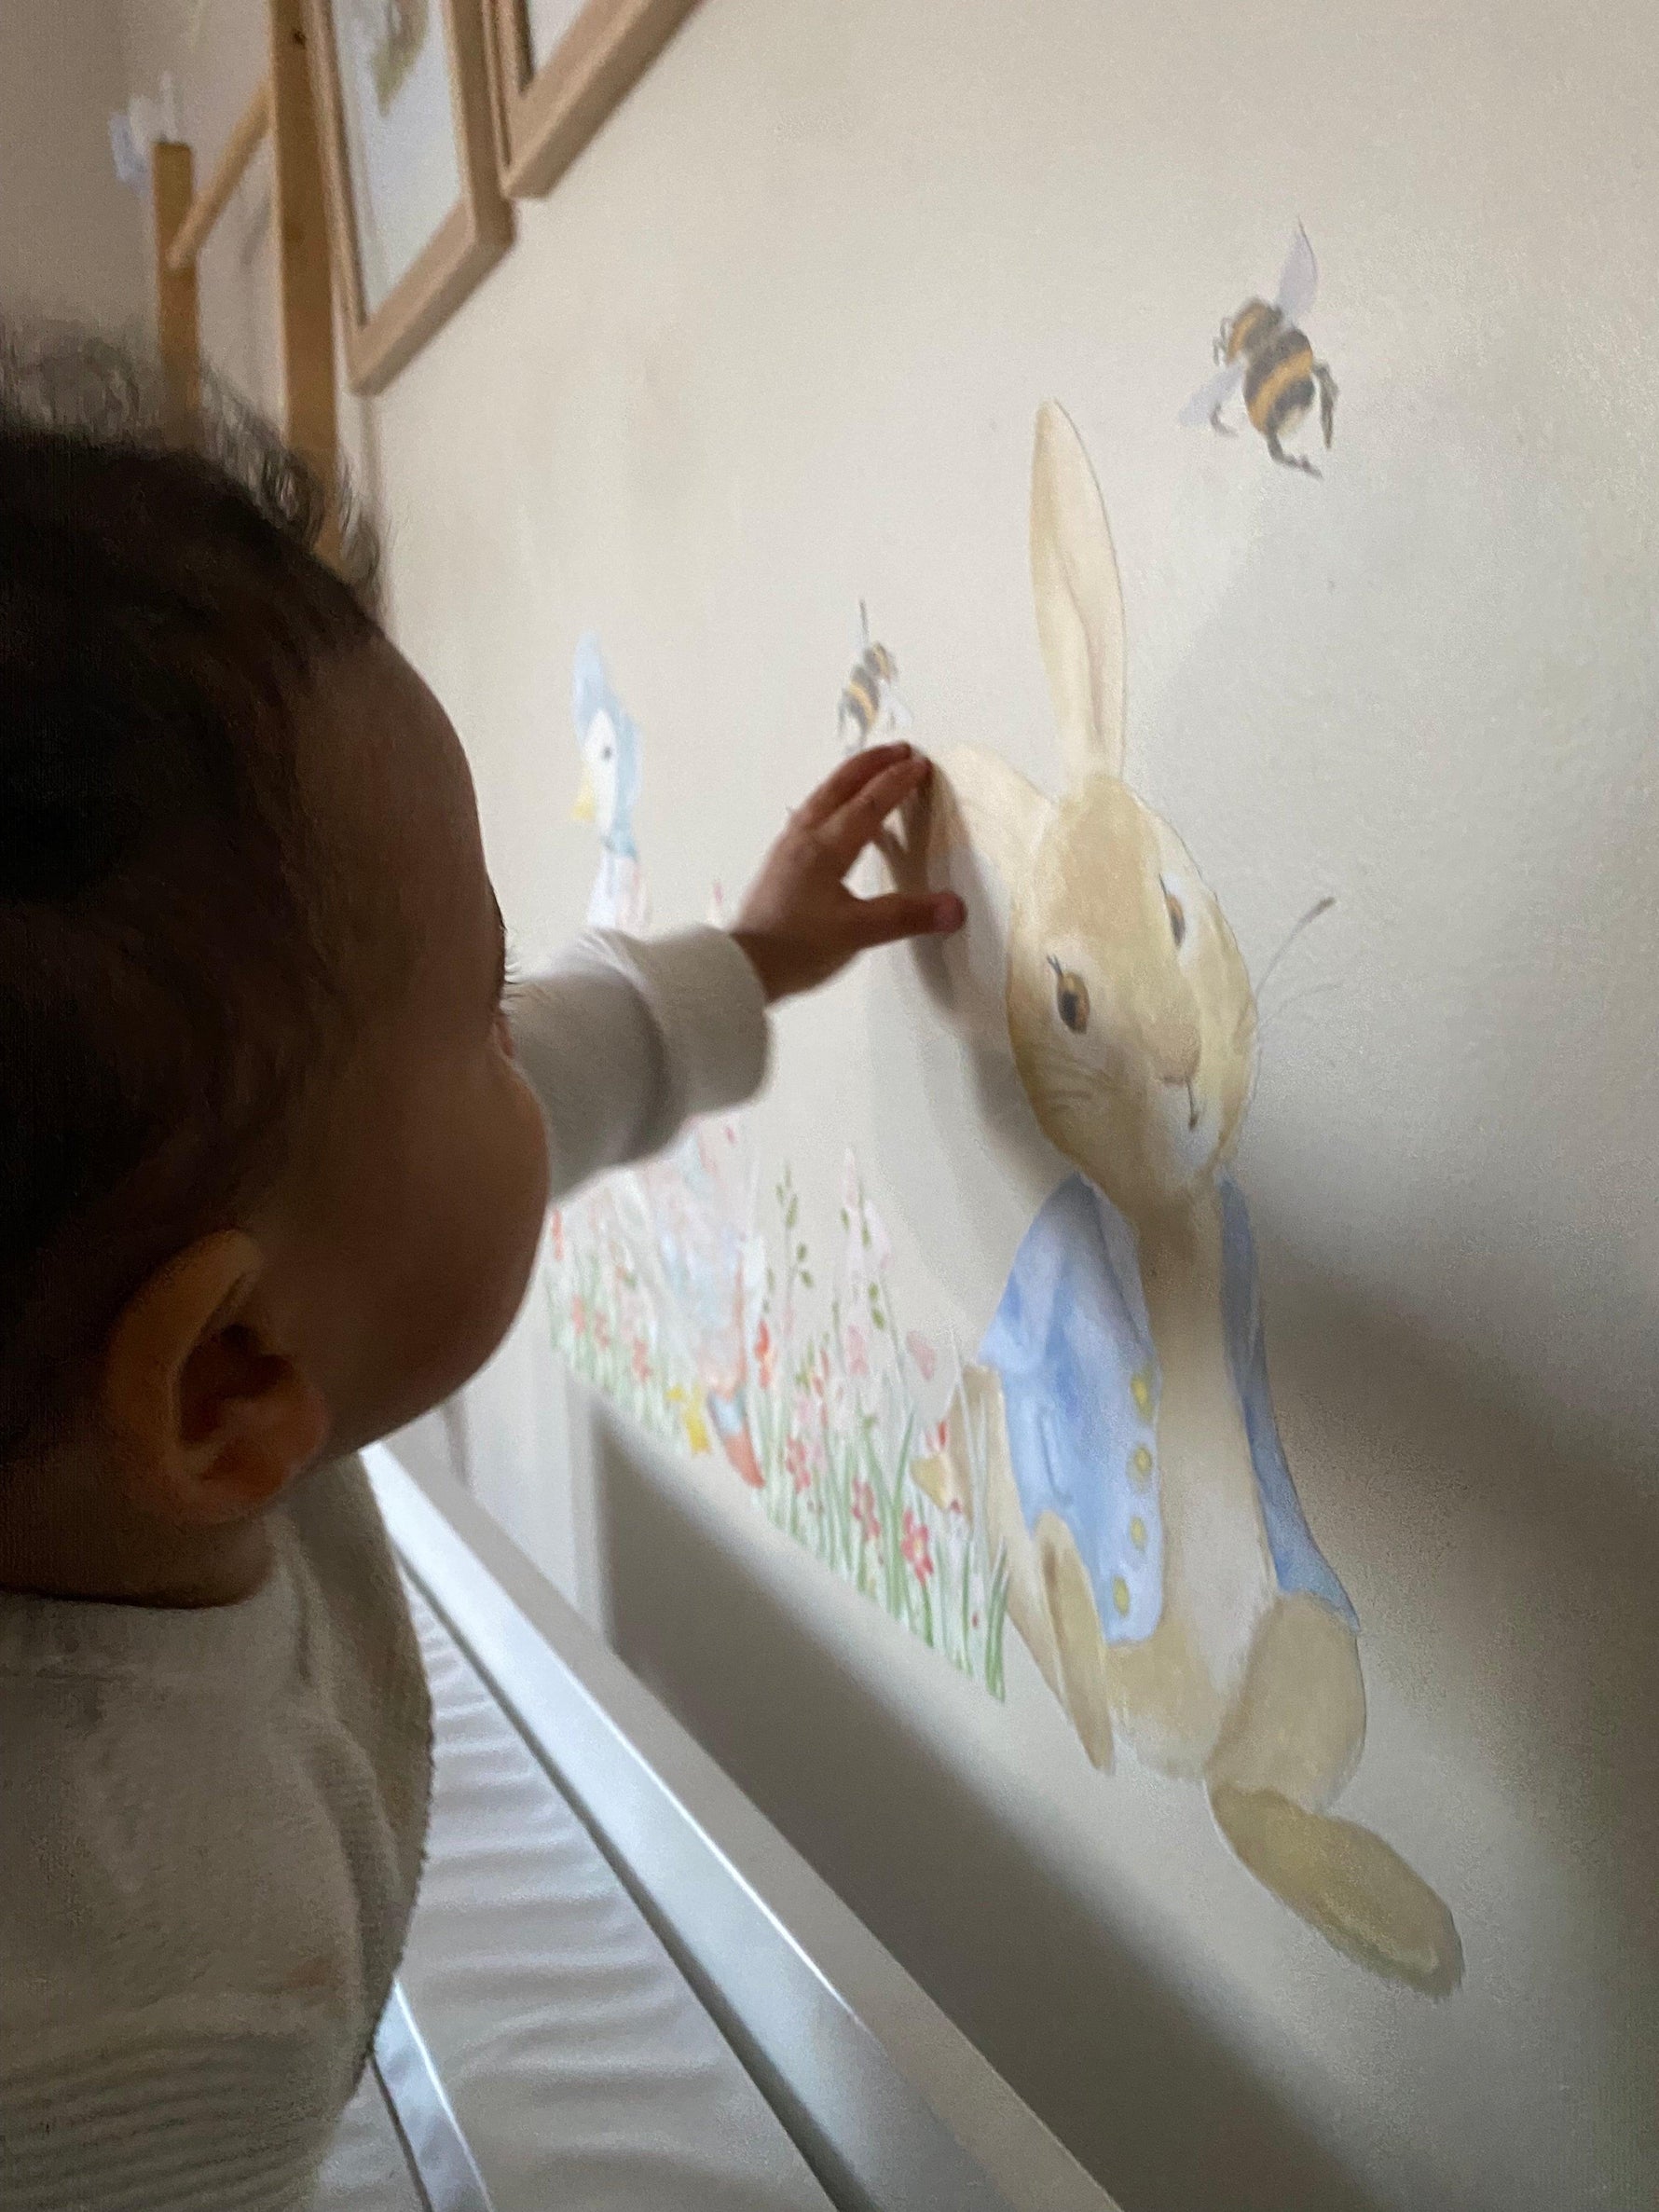 Peter Rabbit - Watercolour Wall Sticker - lovefrankieart